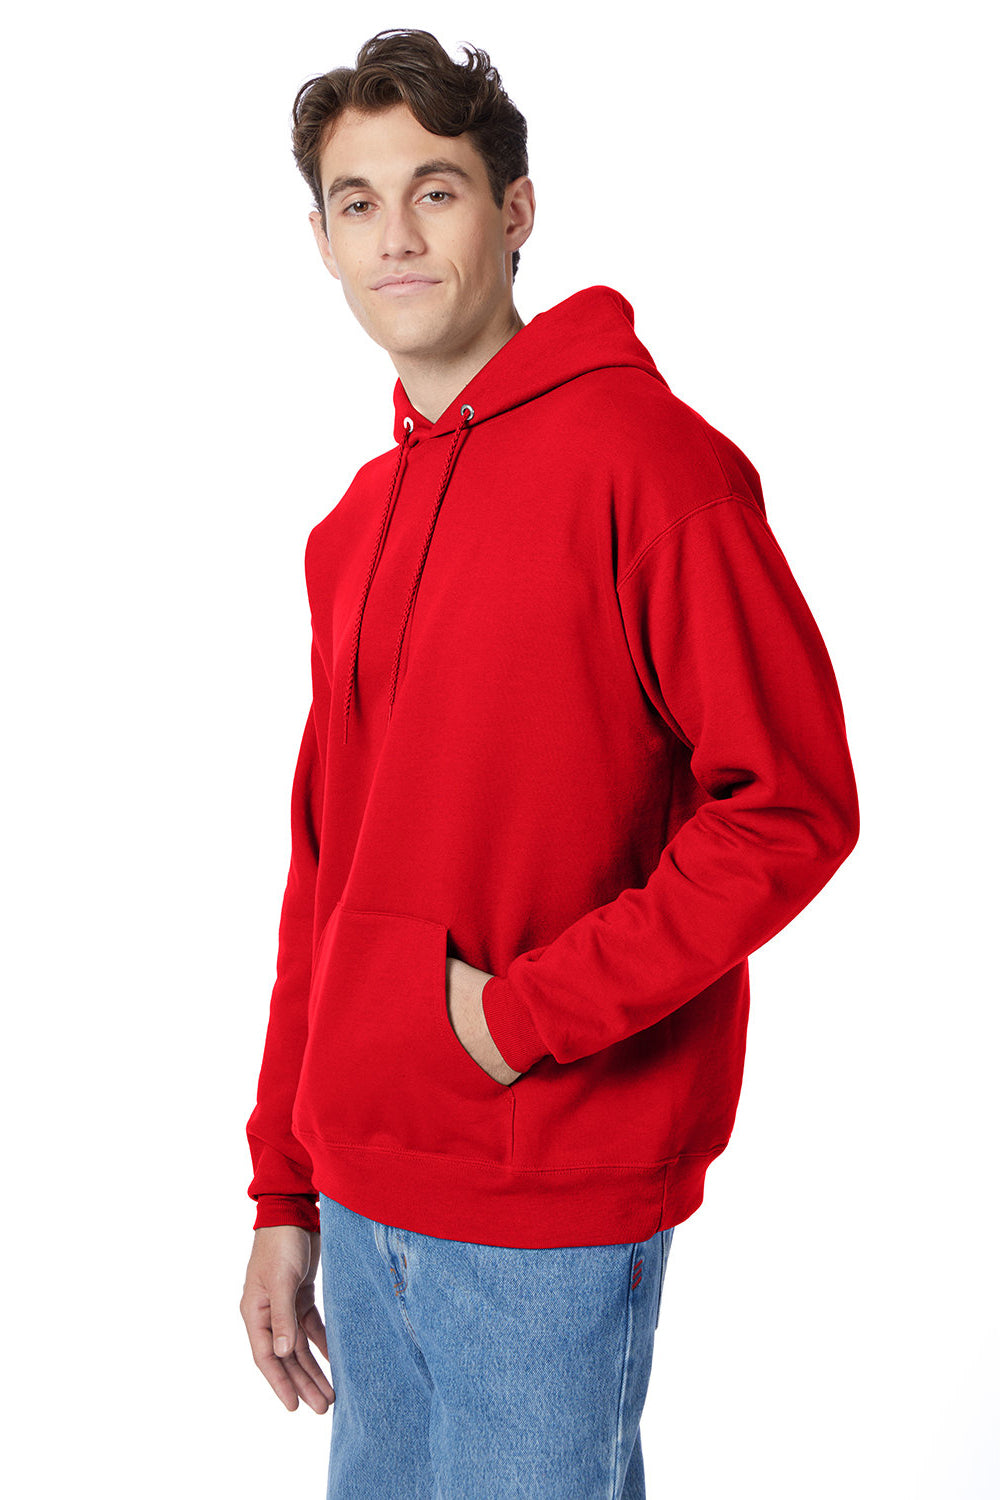 Hanes P170 Mens EcoSmart Print Pro XP Hooded Sweatshirt Hoodie Athletic Red 3Q